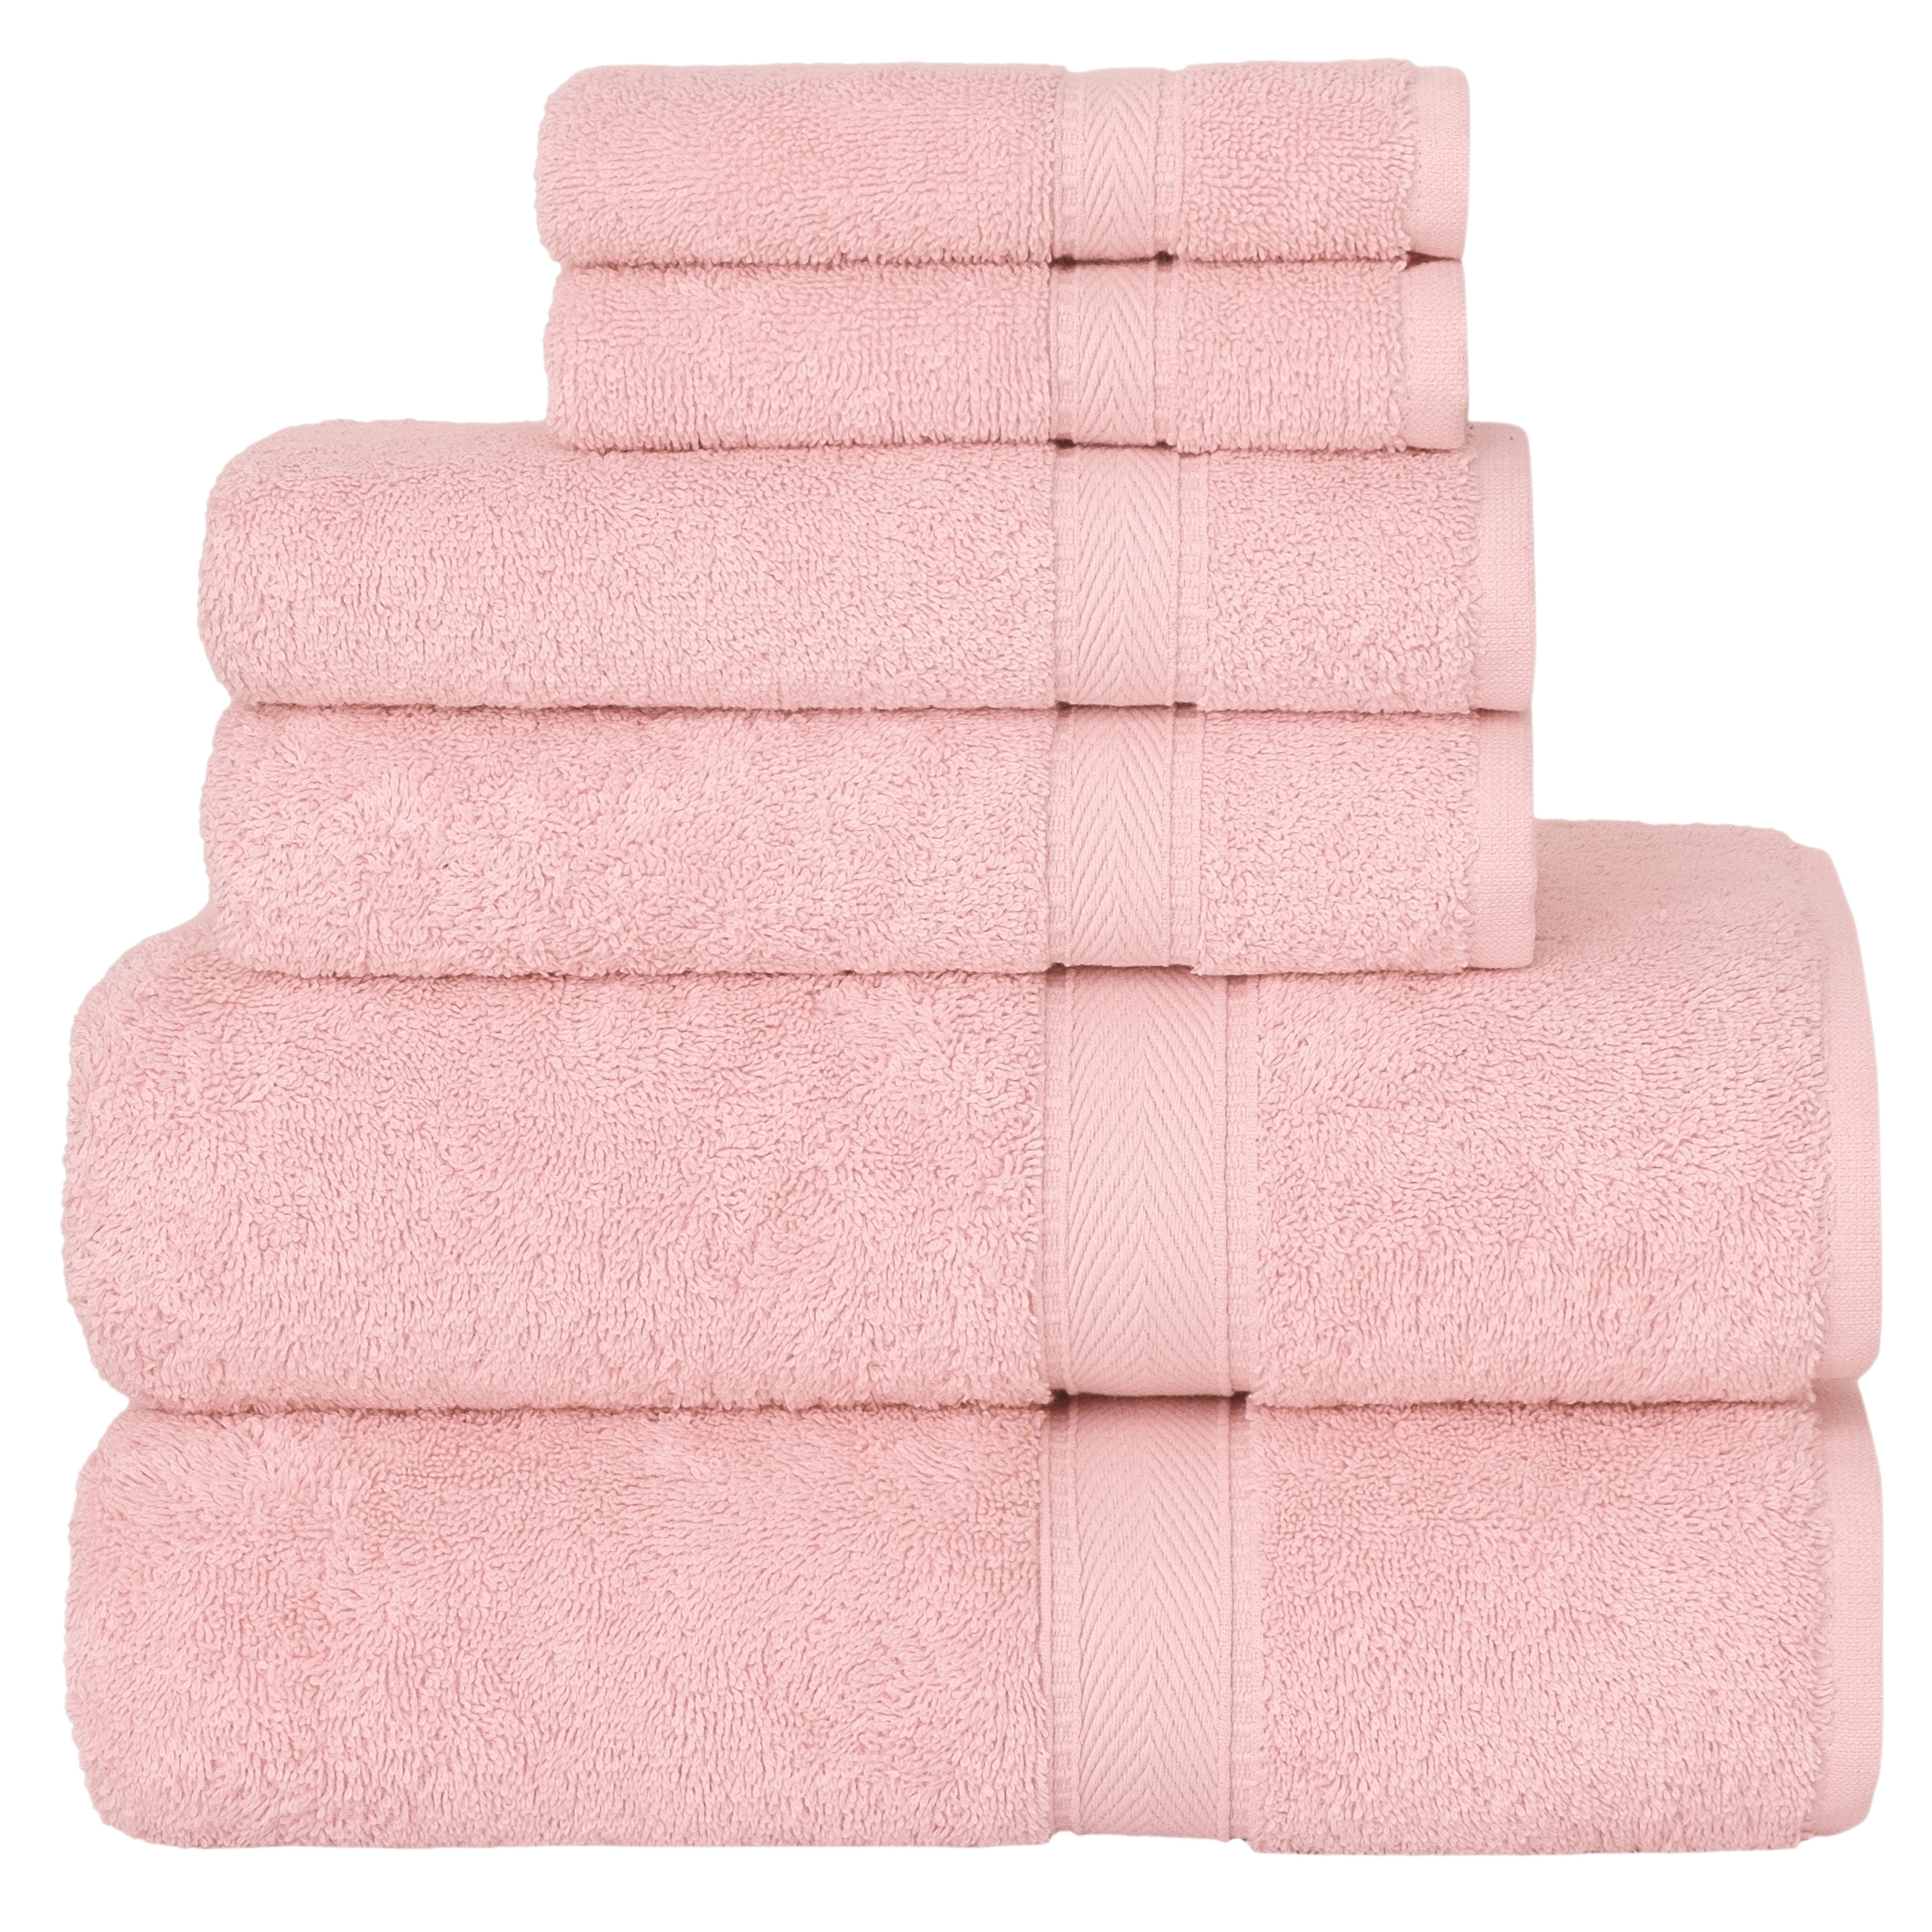 Chakir Turkish Linens Luxury Spa and Hotel Quality Premium Turkish Cotton 6-Piece Towel Set (2 x Bath Towels, 2 x Hand Towels, 2 x Washcloths, Pink)